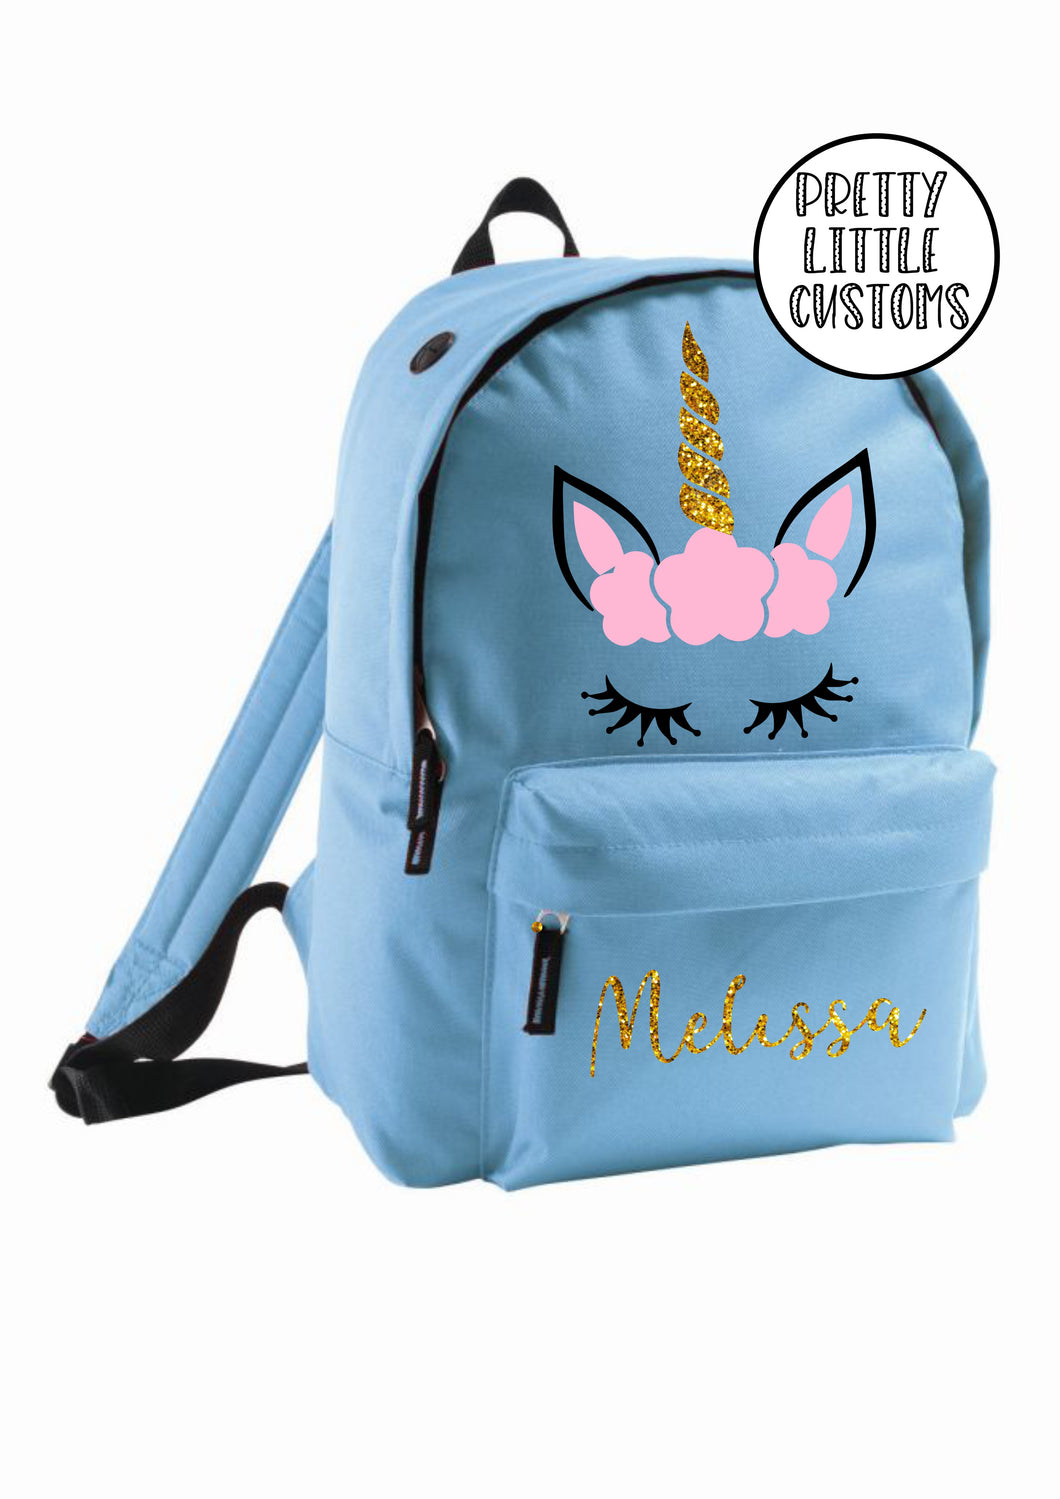 Personalised kids name rucksack/backpack/school bag - GLITTER unicorn